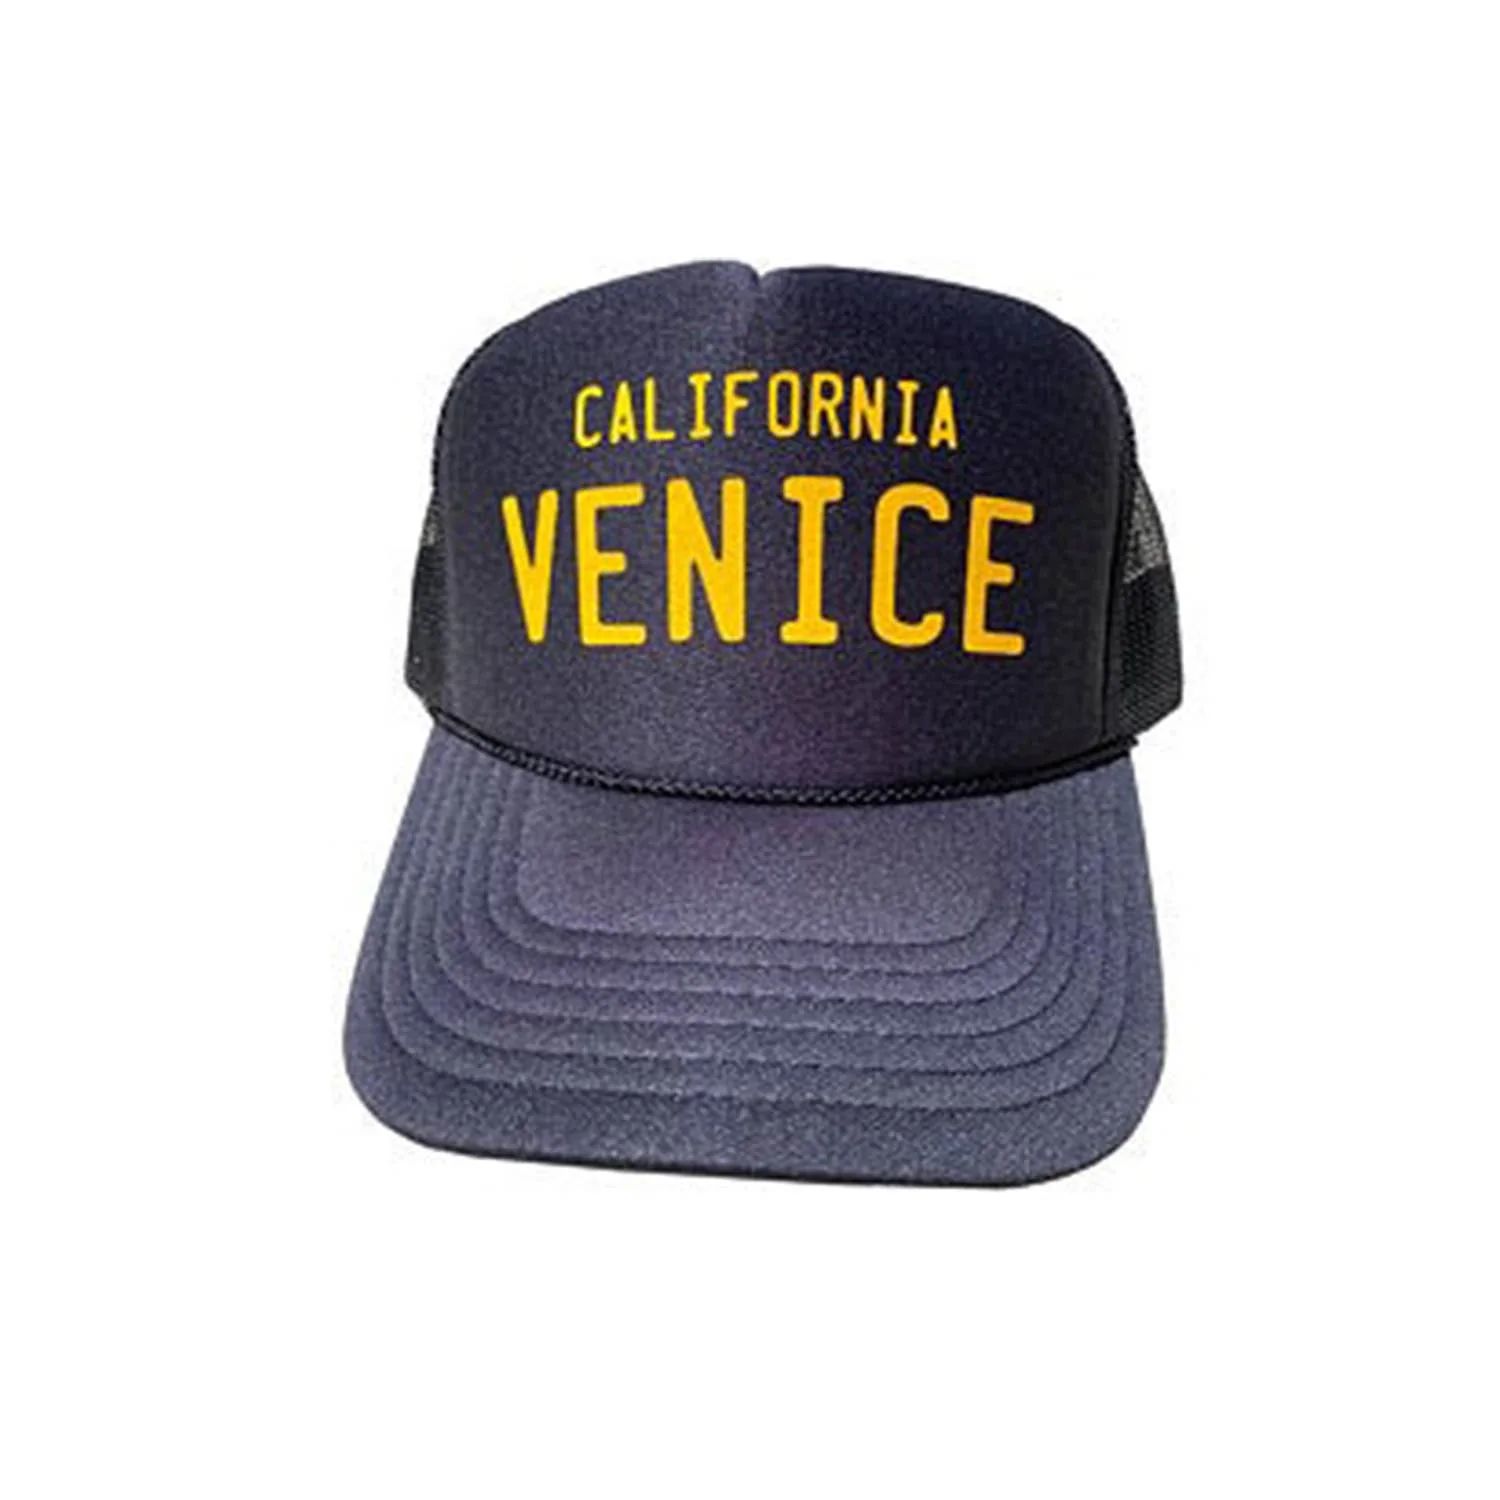 Venice License Plate Trucker Hat | Ascot + Hart